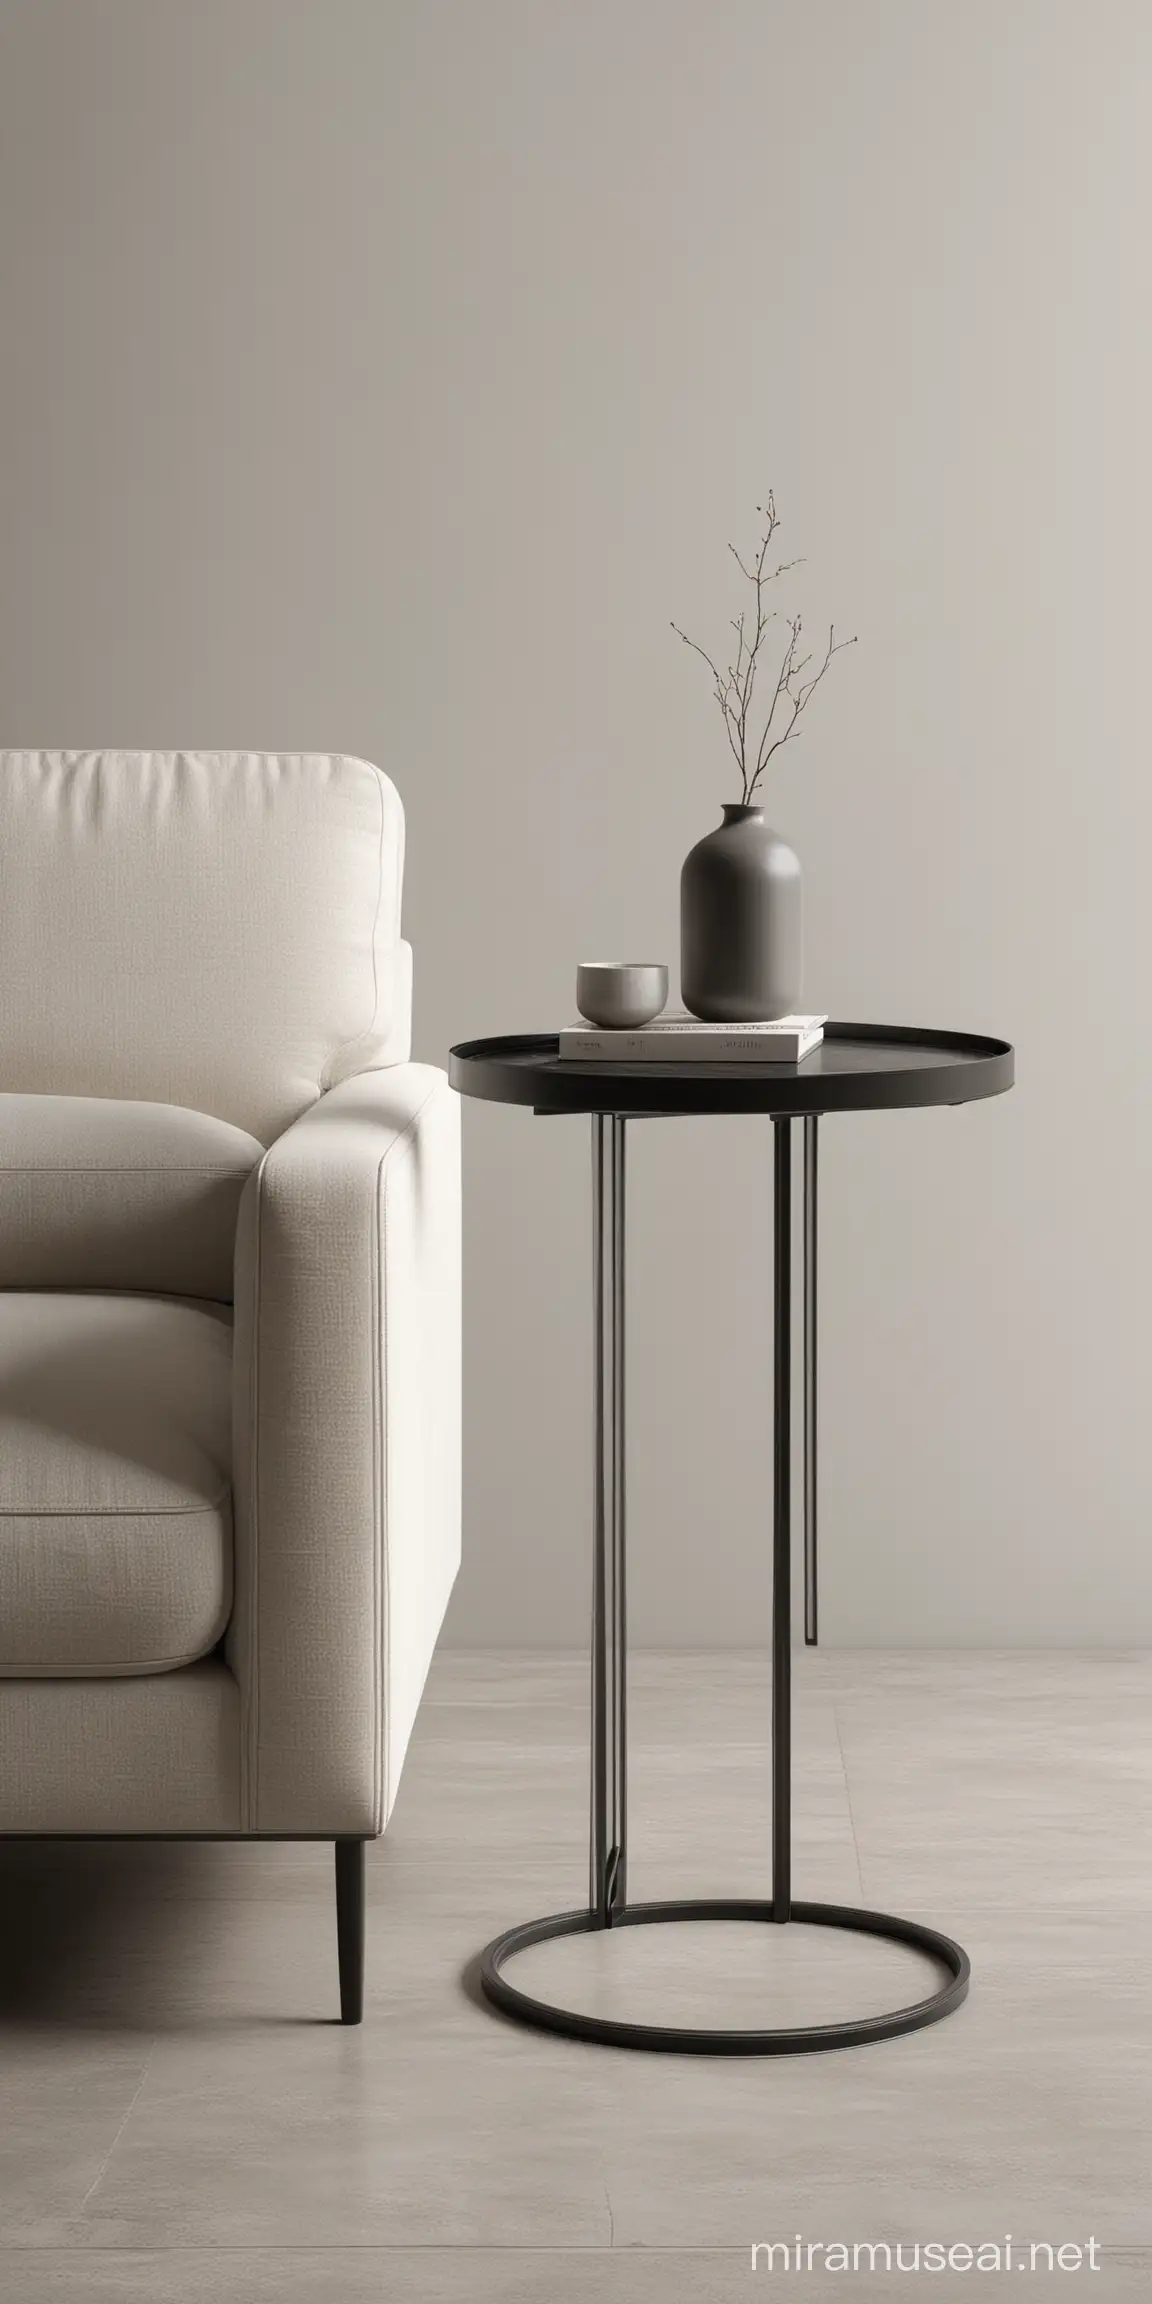 Side table, sofa, minimal style, interior scene
